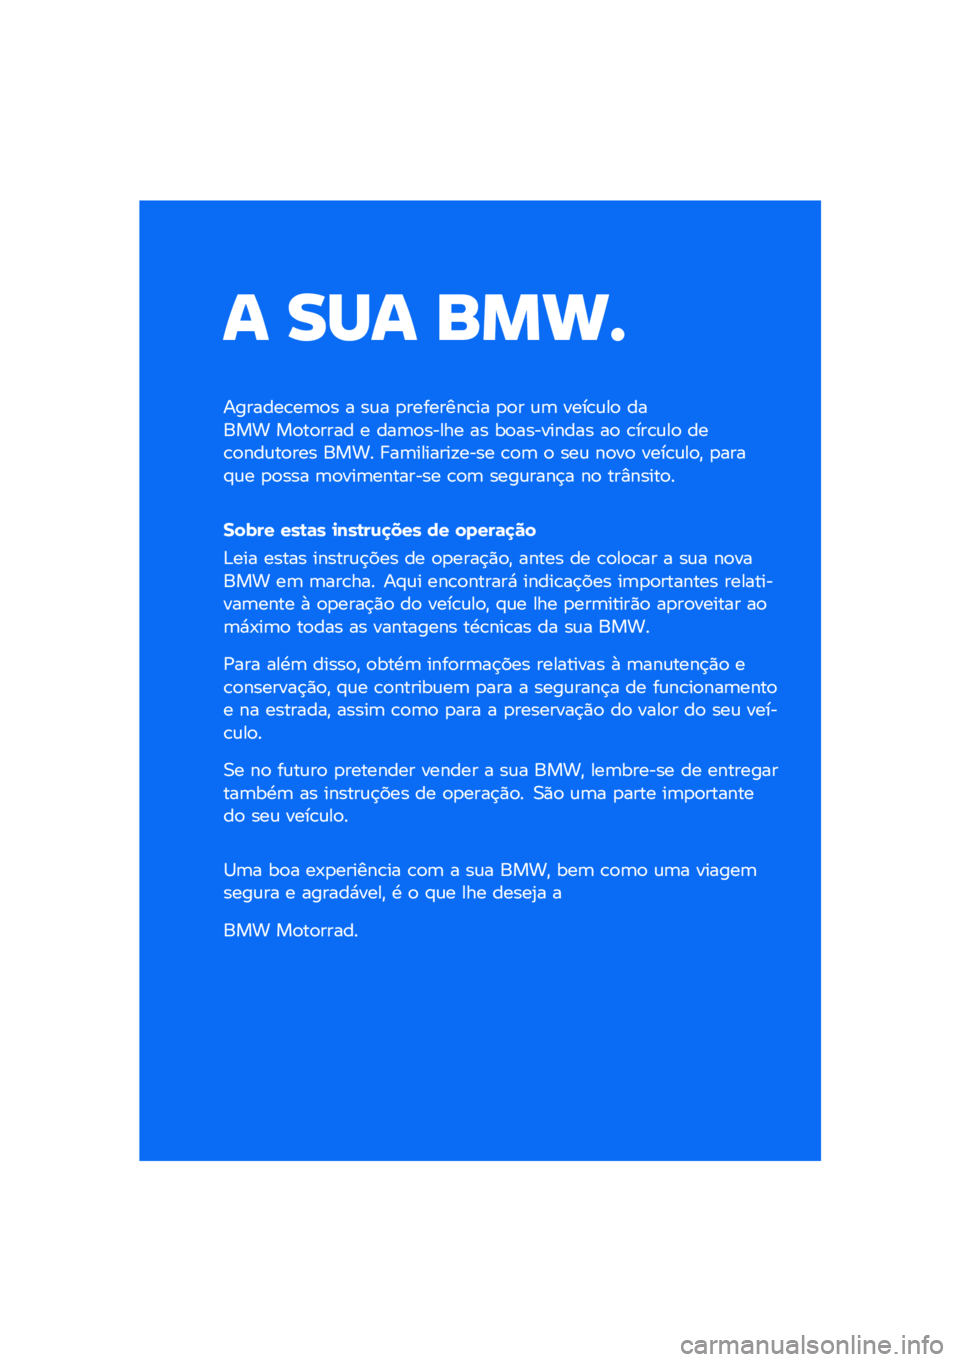 BMW MOTORRAD R NINE T URVAN G/S 2021  Manual do condutor (in Portuguese) � ��� ����\b
�������\b��	�
� � ��\f� �
��������\b�� �
�
� �\f�	 ����\b�\f��
 ����� ��
��
���� � ���	�
����� �� ��
��������� ��
 �\b���